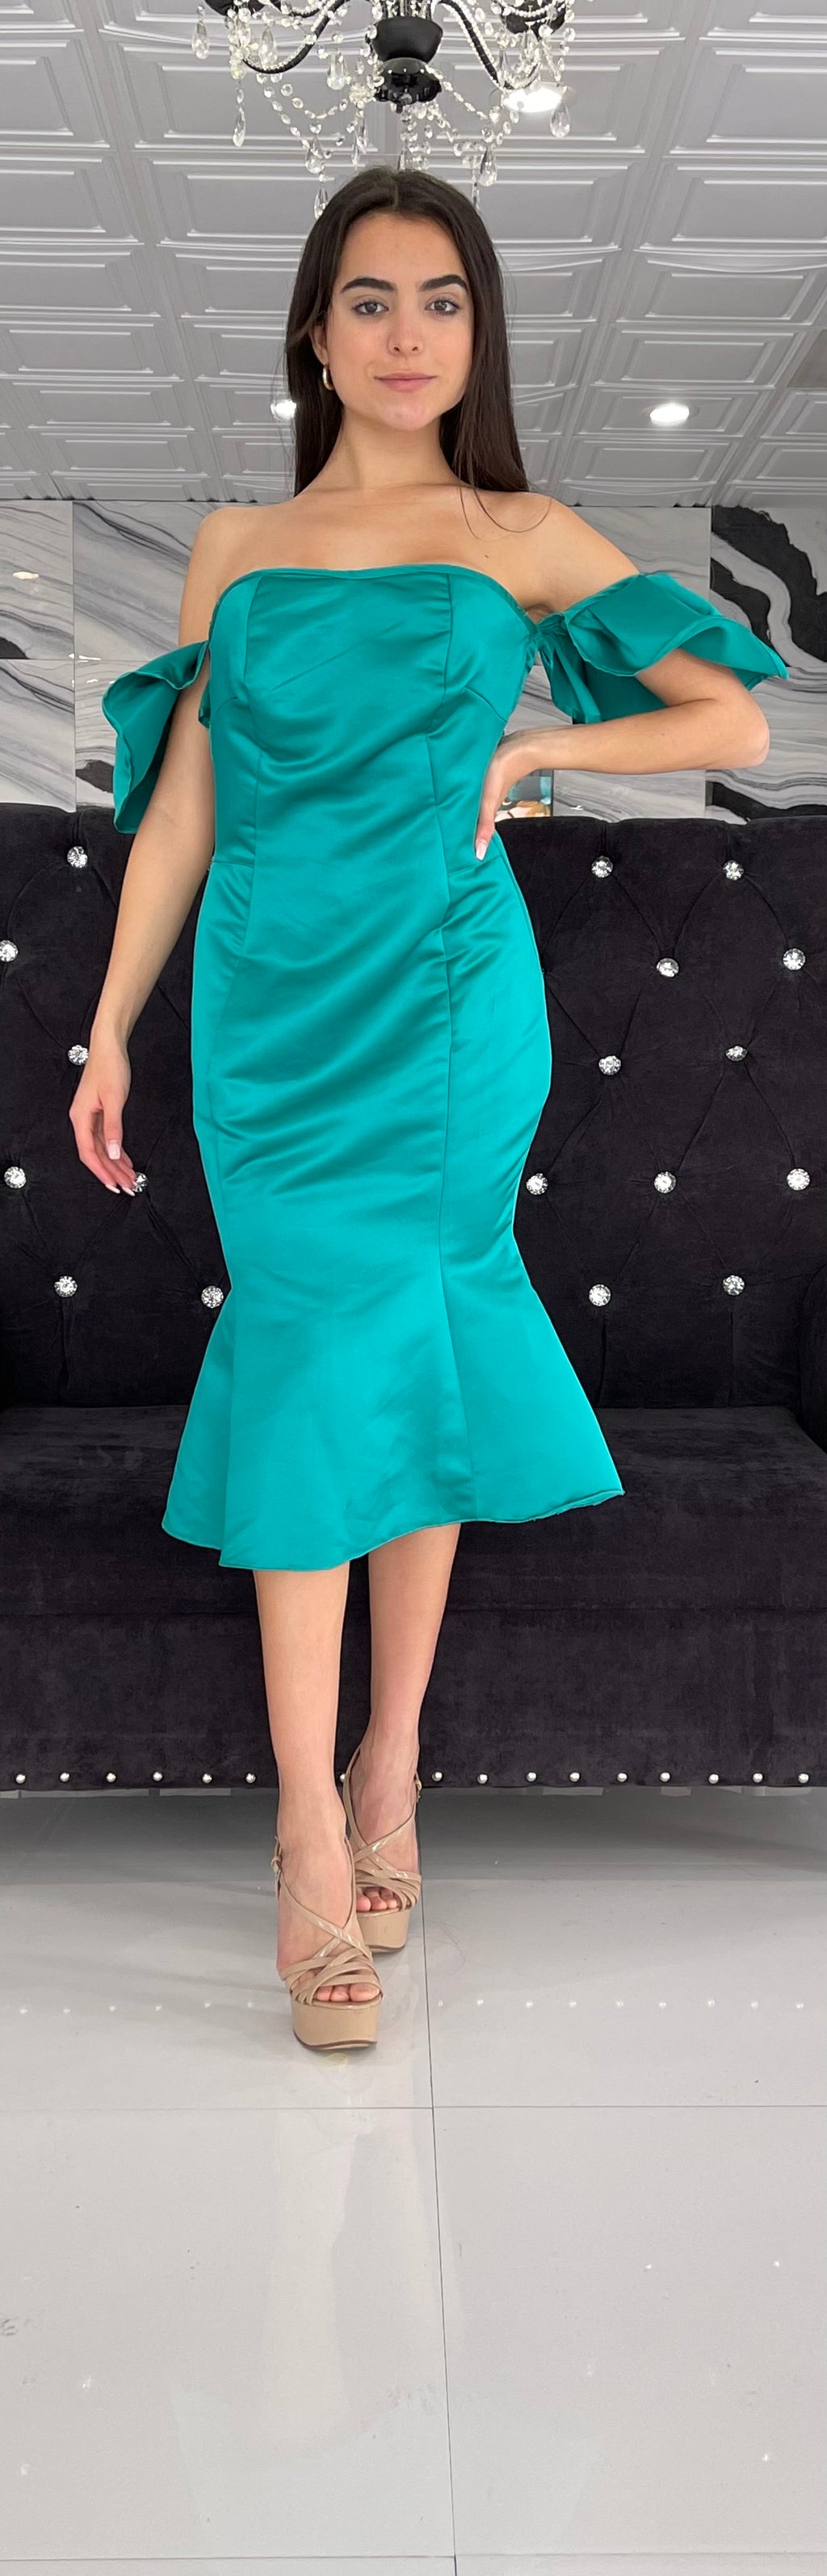 Turquoise Dress